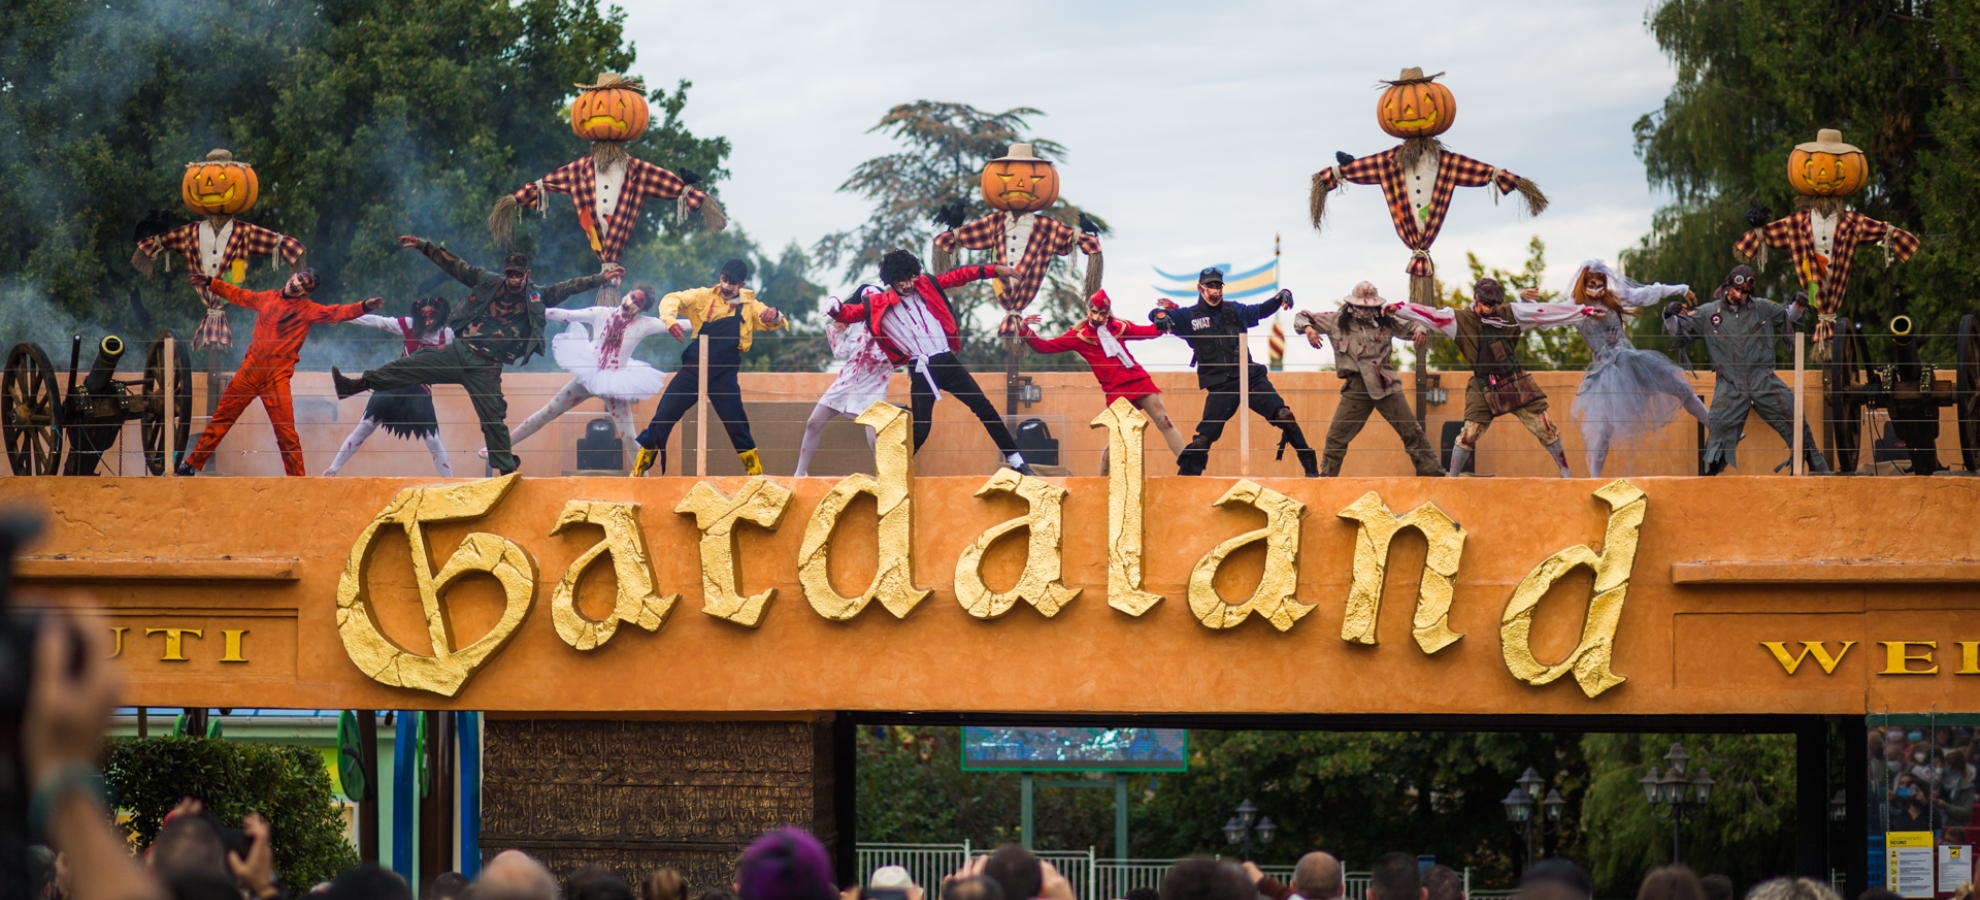 Gardaland Magic Halloween